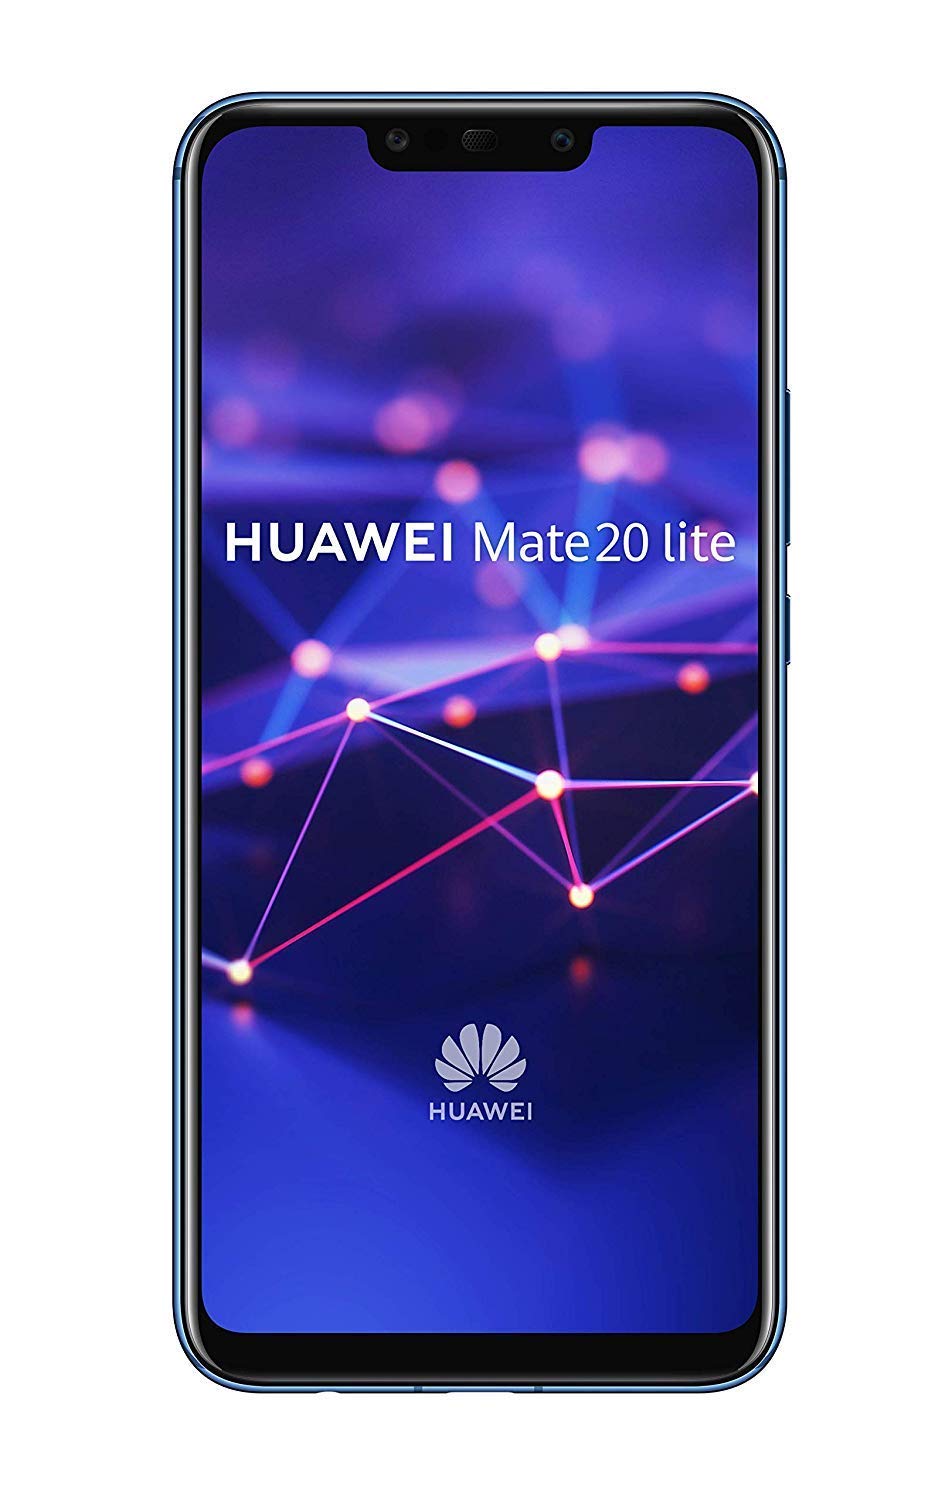 Huawei Mate 20 Lite Hybrid/Dual-SIM 64GB SNE-LX1 (GSM Only, No CDMA) Factory Unlocked 4G Smartphone (Sapphire Blue) - Internatio